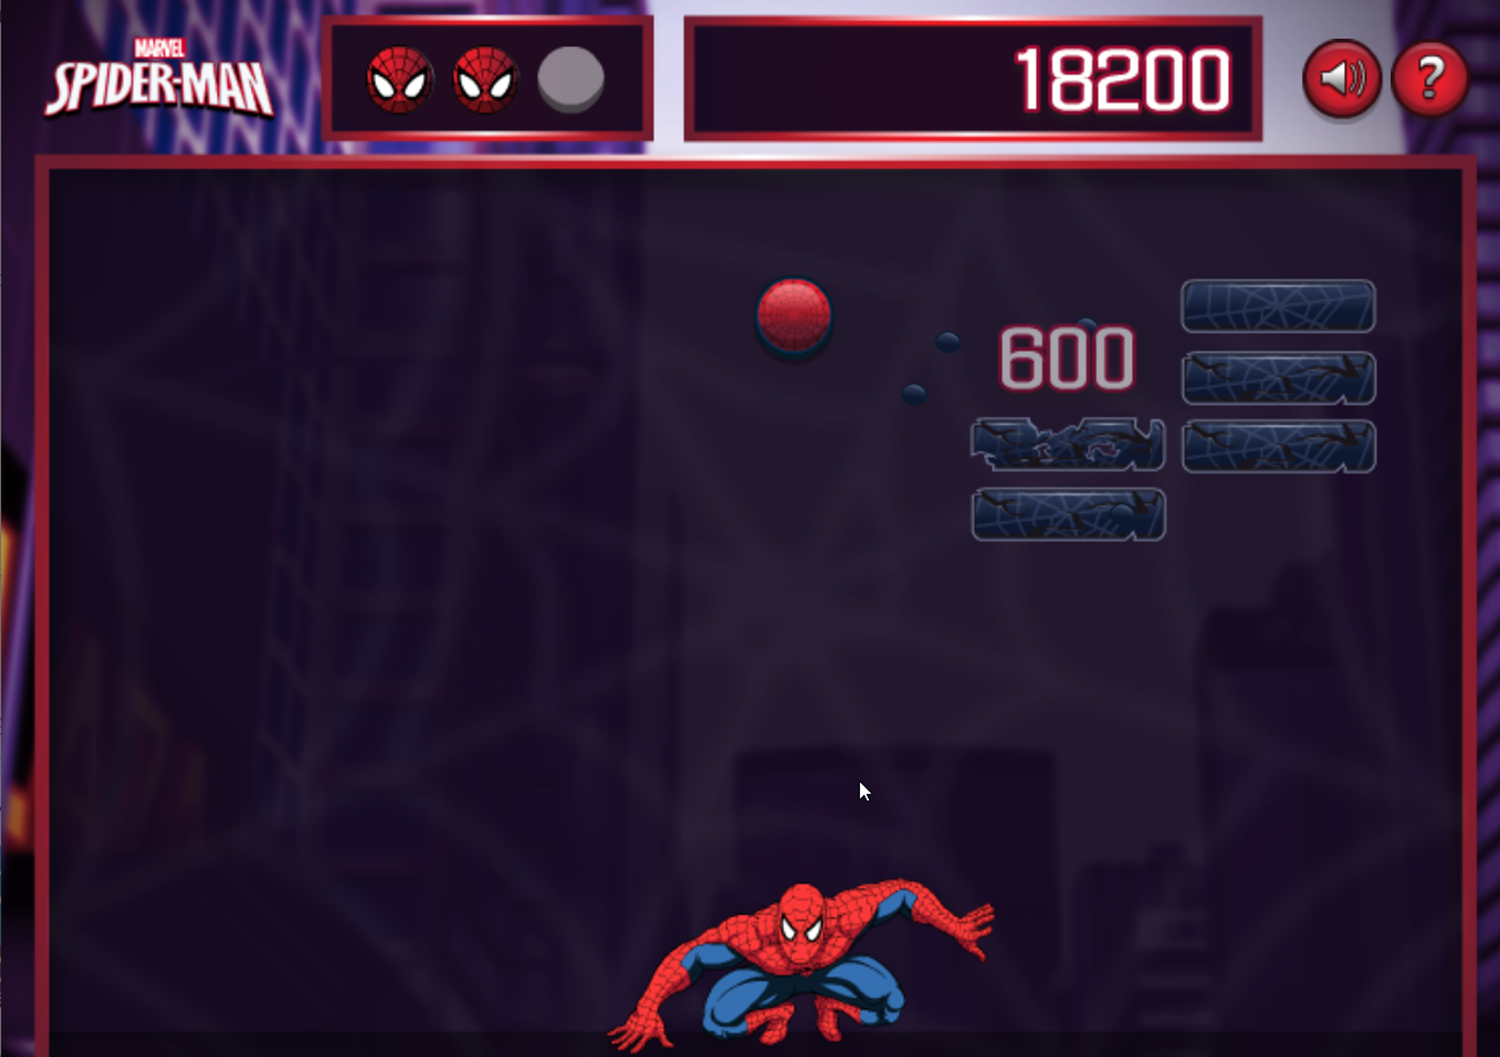 Spider-Man Venom's Vengeance Game Play Screenshot.